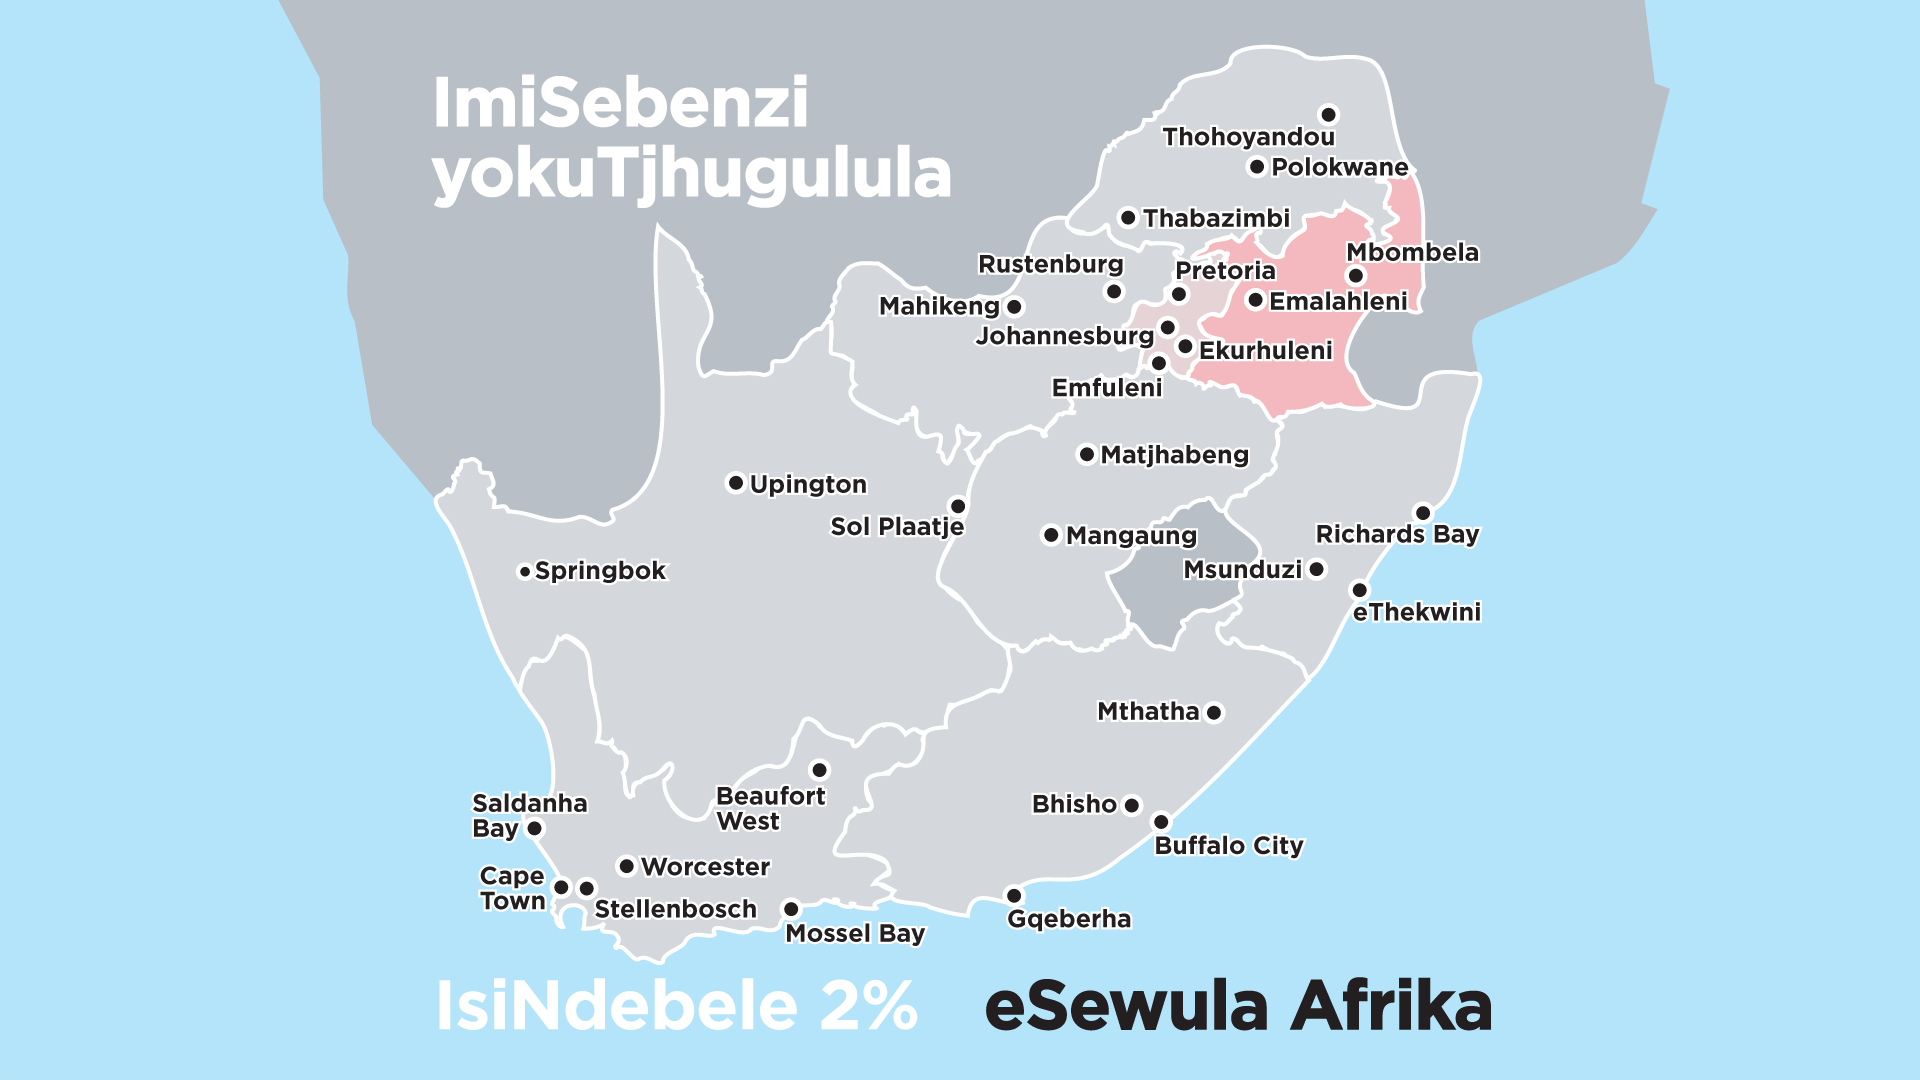 Ndebele Translation Services